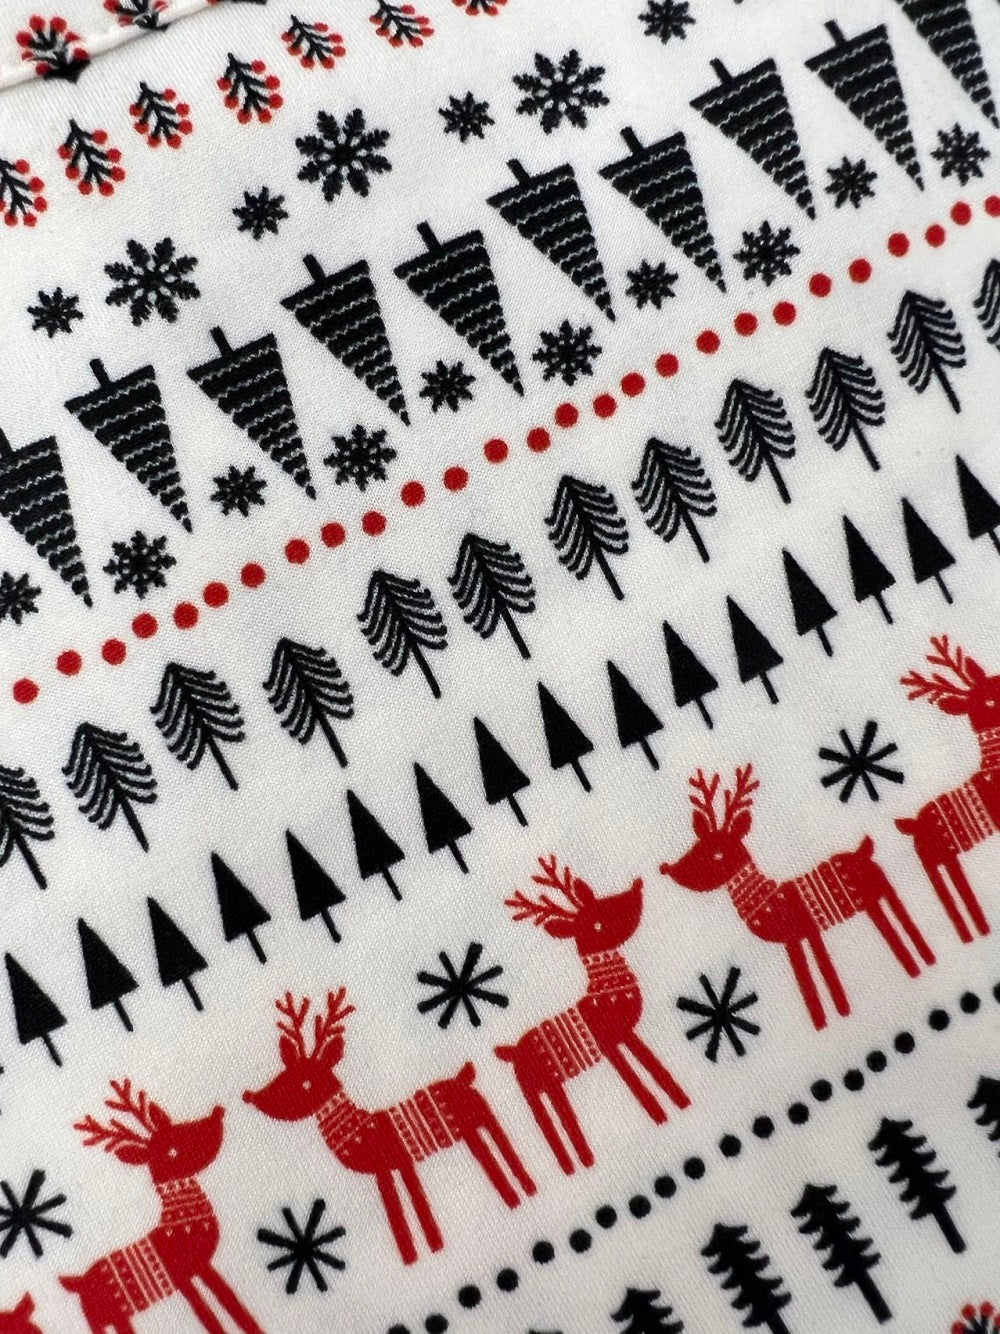 Wholesale Big Kids Christmas 2-Piece Fleece Lined Pull Over Hoodie + Sweatpants Pajamas Sets - Red, White, Black Fair Isle Print